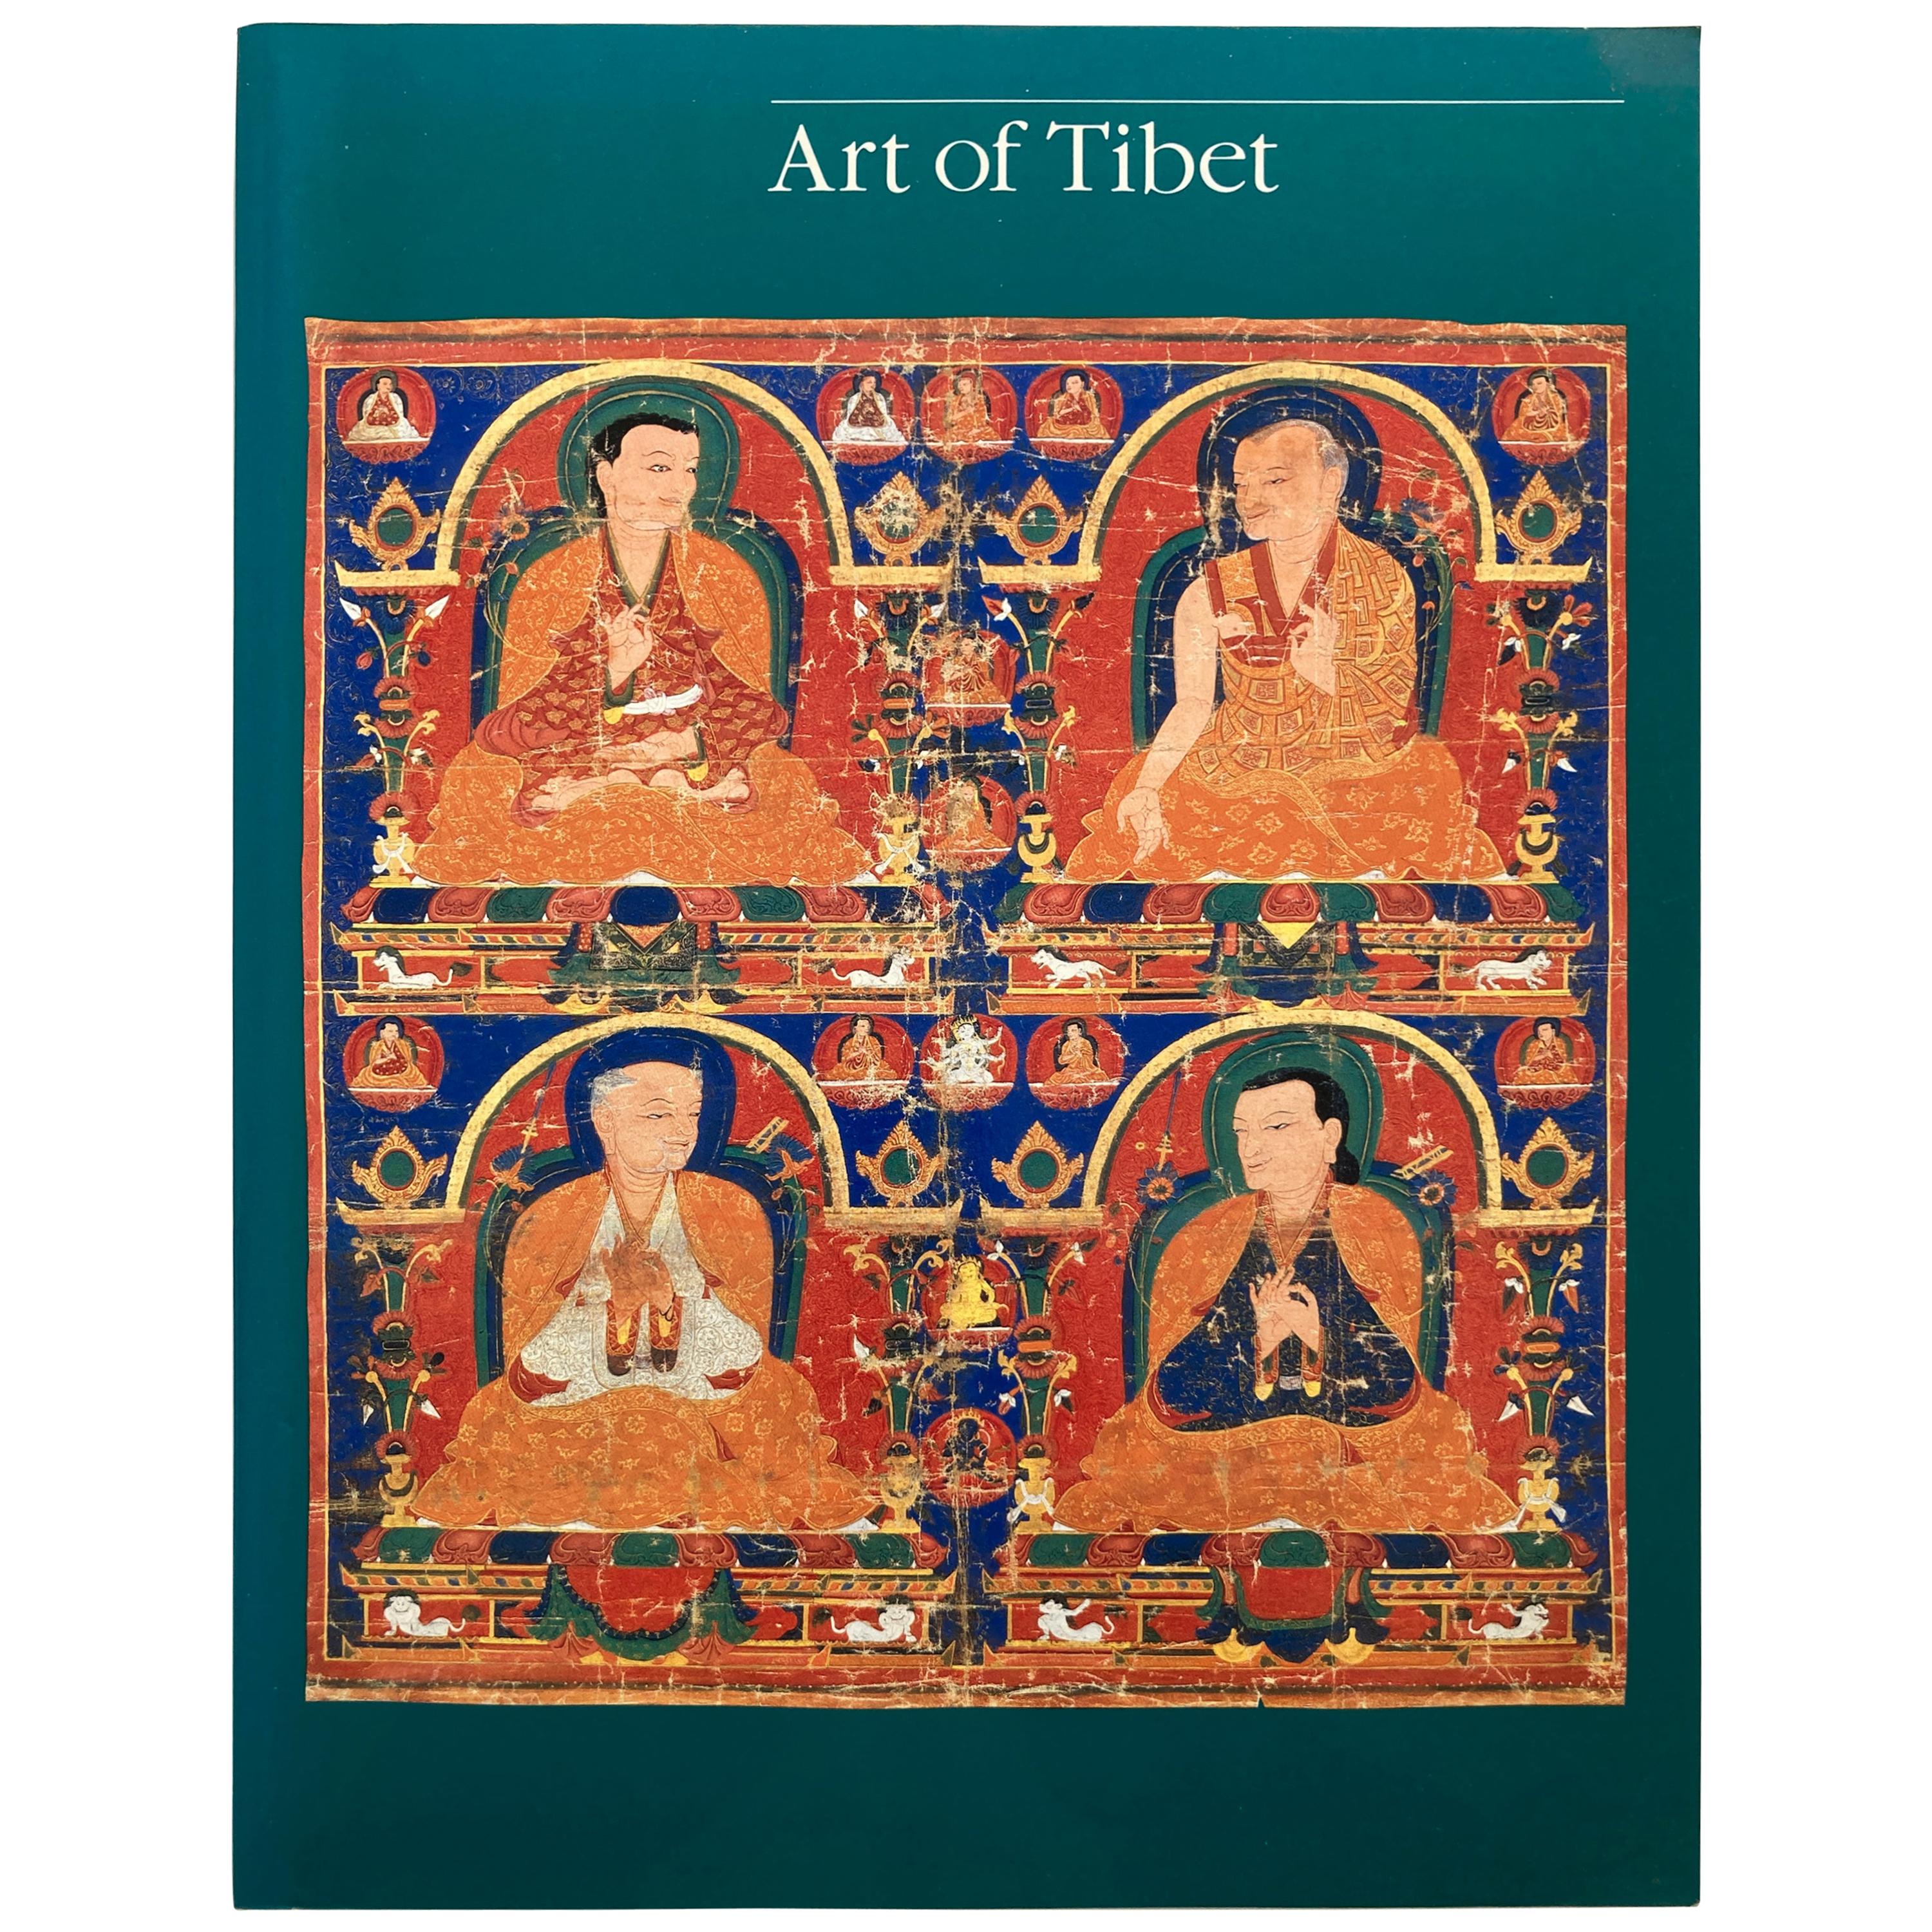 Art of Tibet Book by Pratapaditya Pal